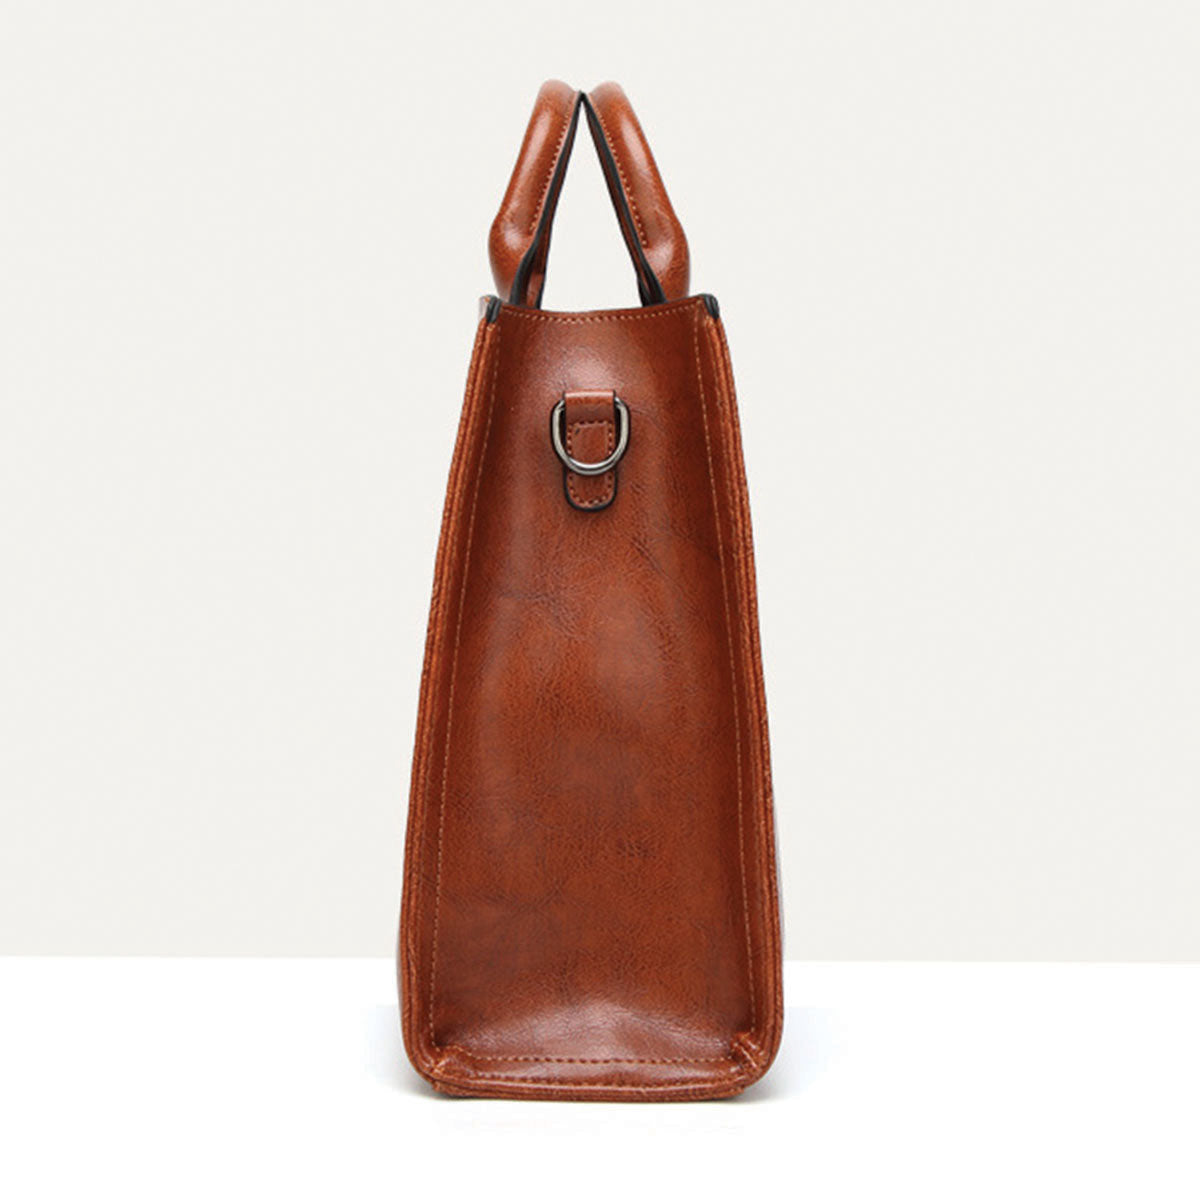 Your Best Companion - Pomeranian Luxury Handbag V2